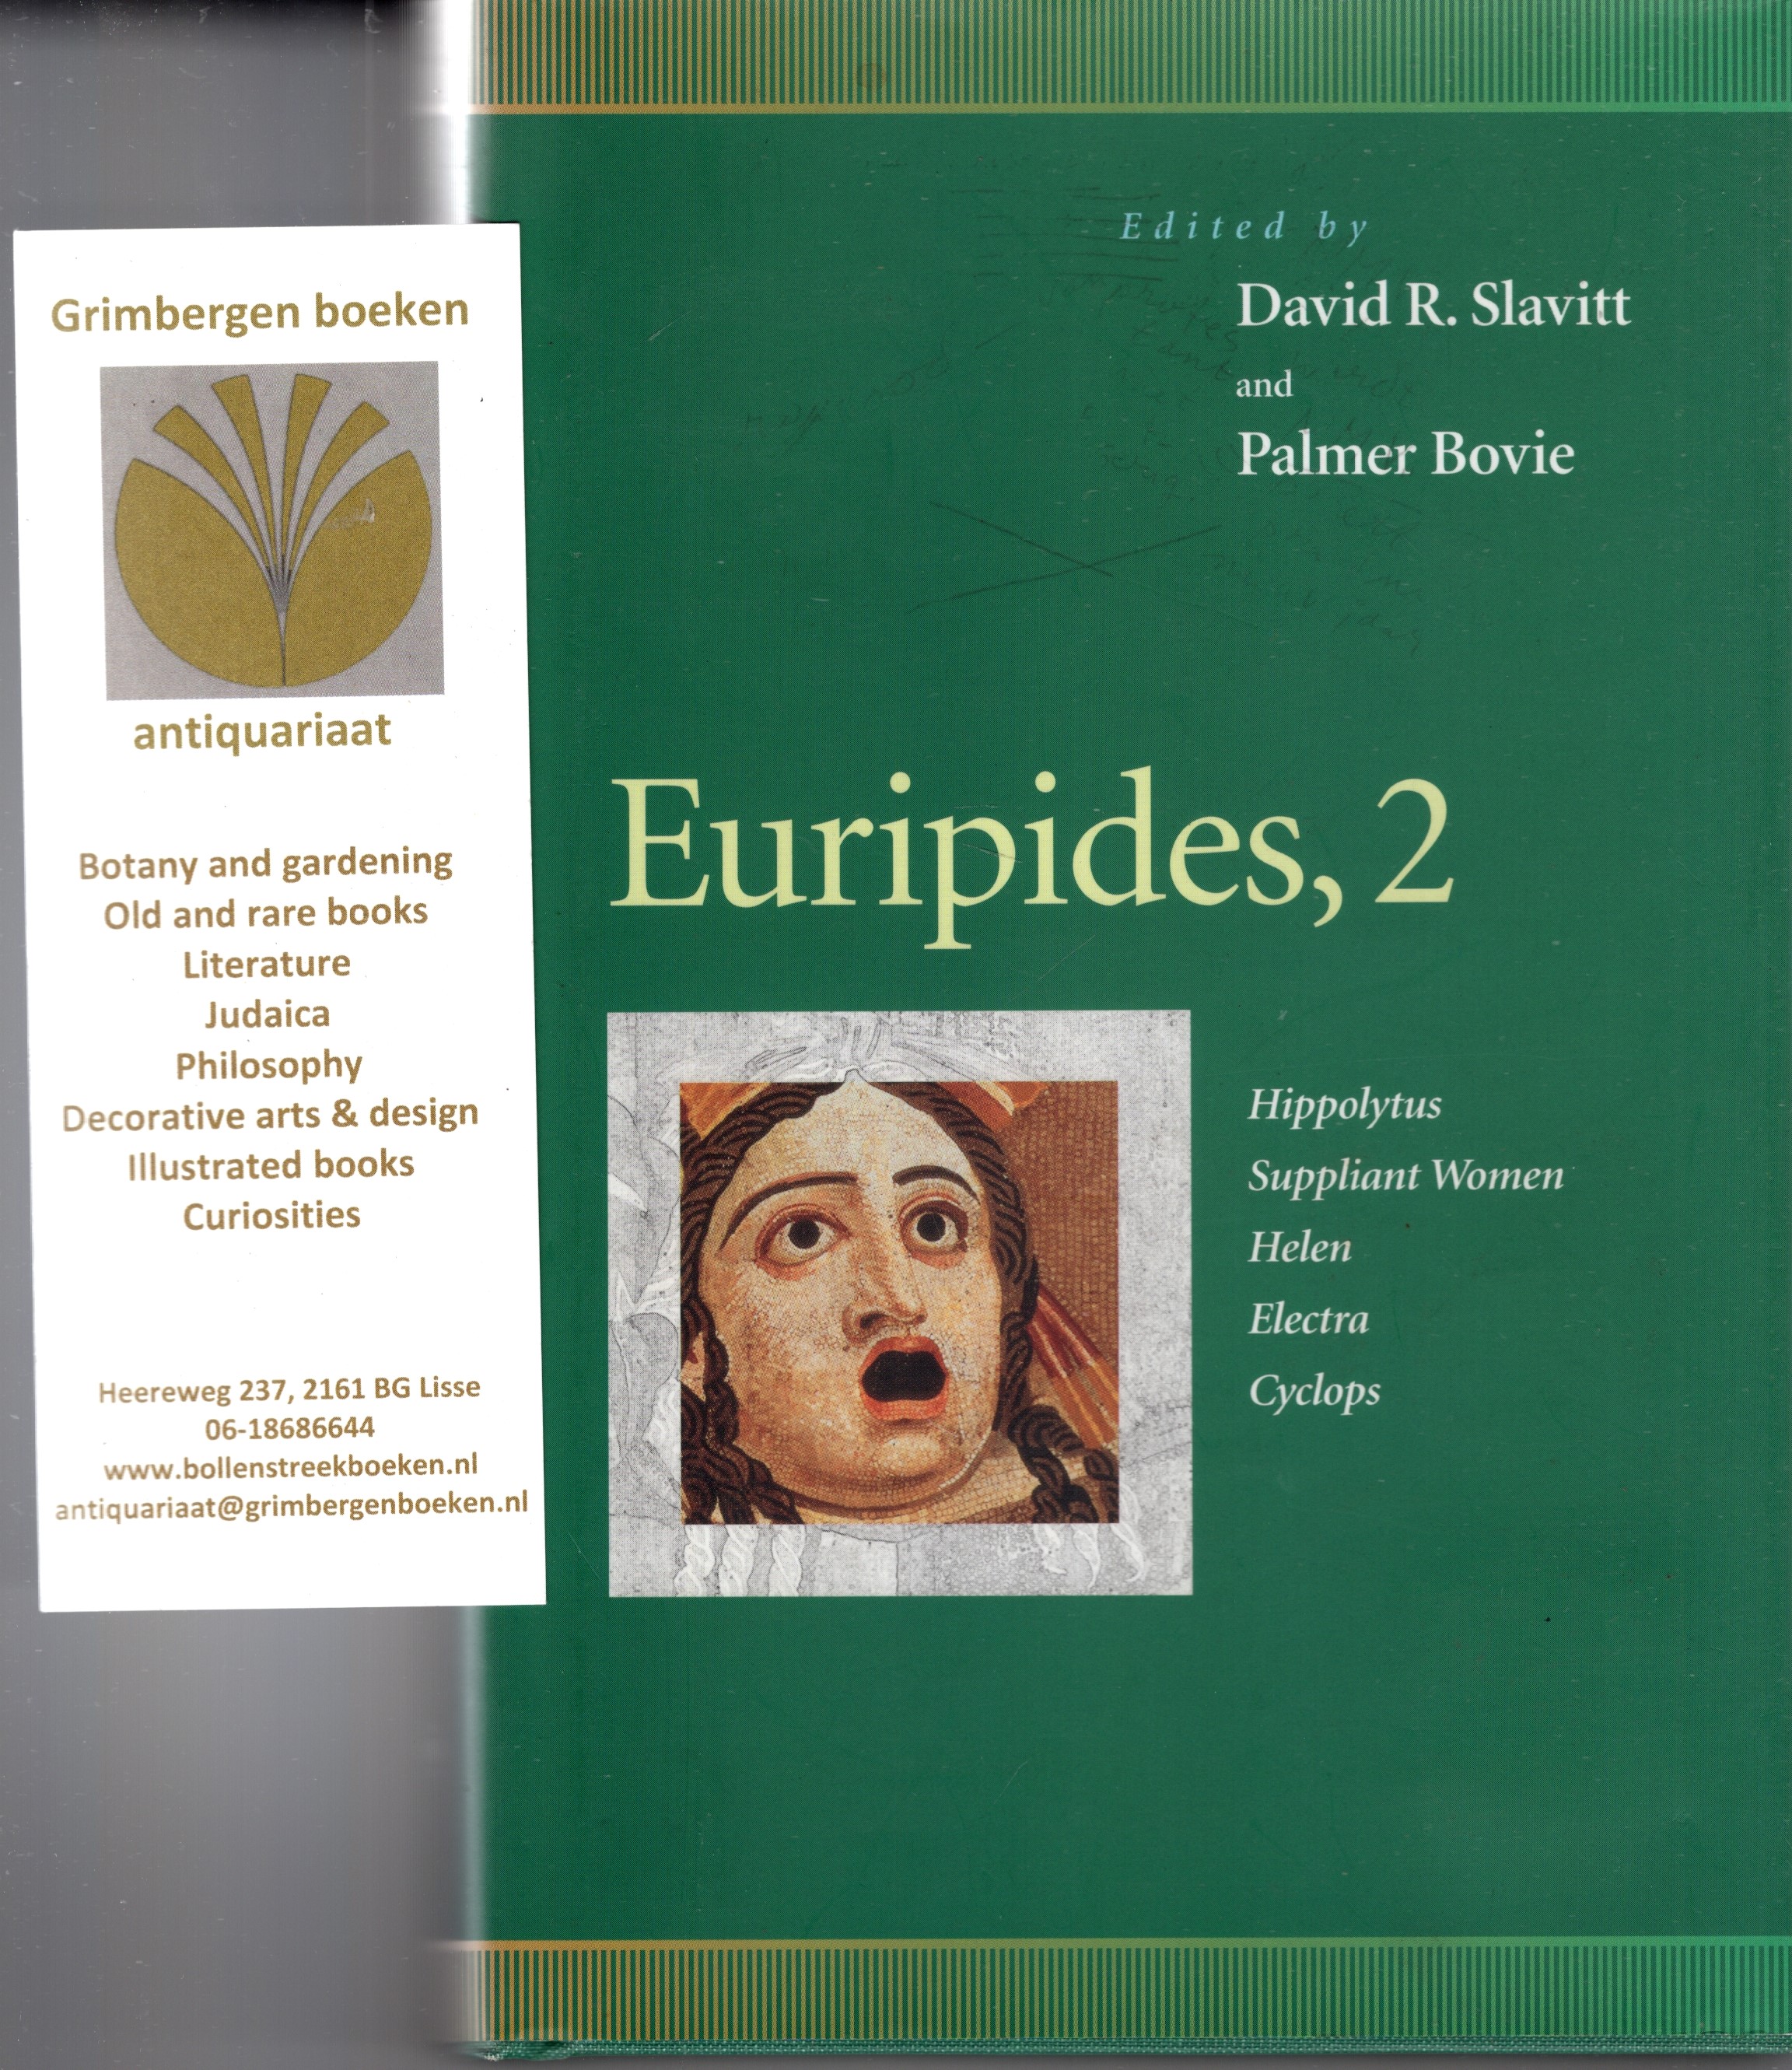 Slavitt, David R.; Palmer Bovie - Euripides, 2.  2: Hippolytus, Suppliant Women, Helen, Electra, Cyclops